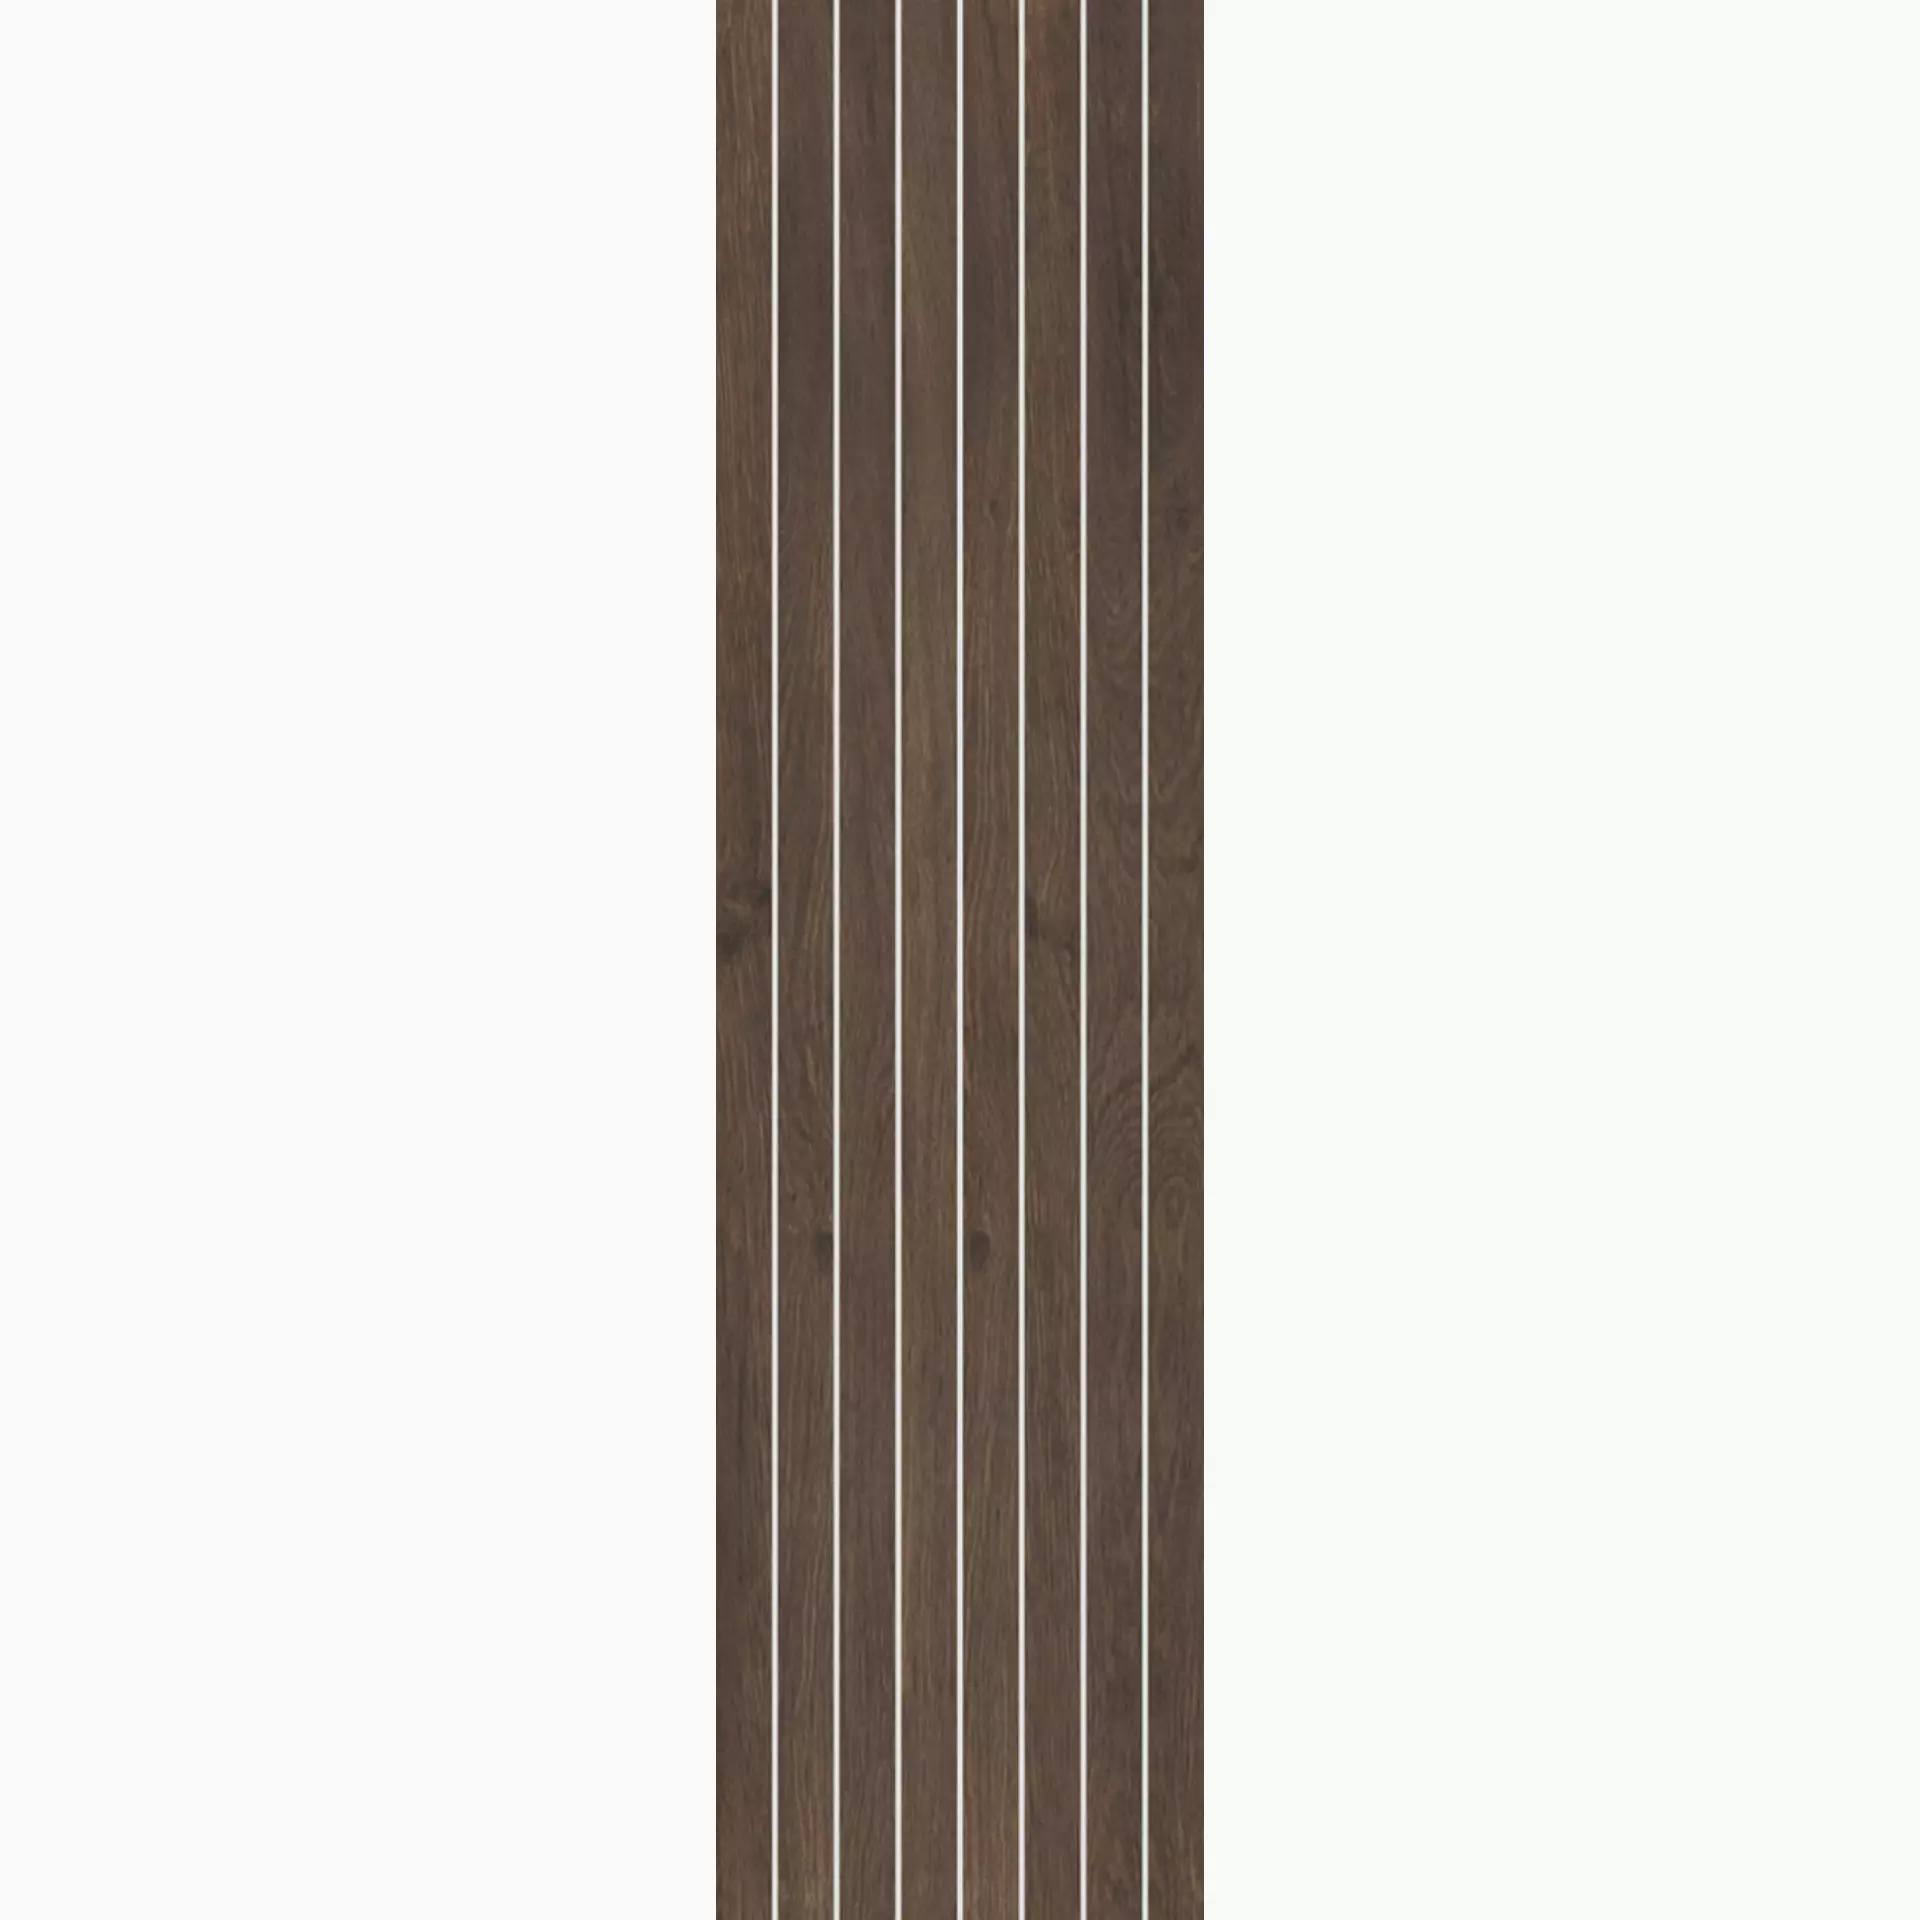 Rondine Bricola Ebano Naturale Decor Tendina J87274 30x120cm 9,5mm